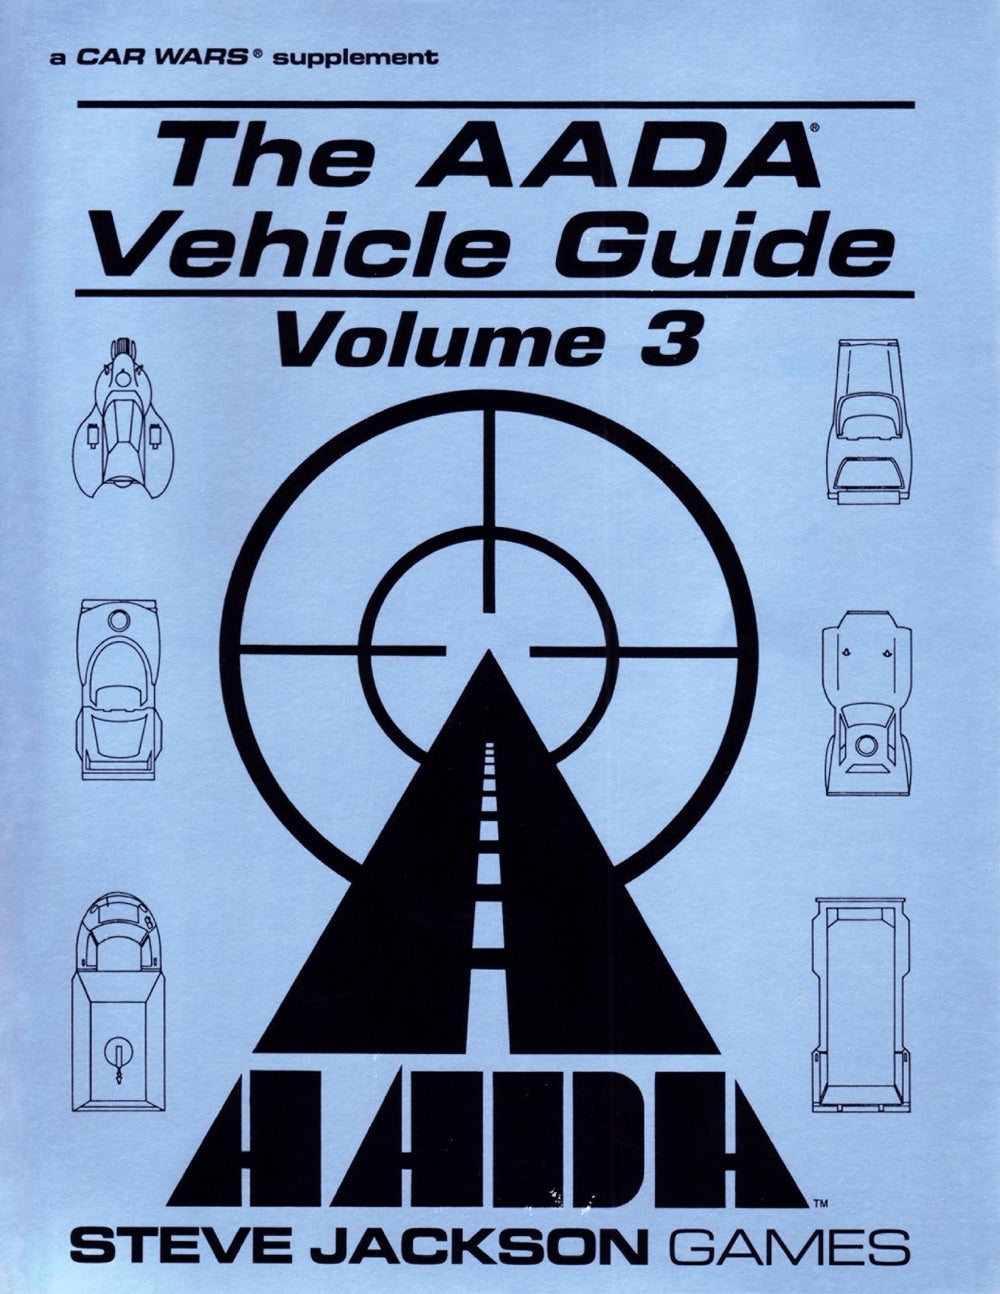 The AADA Vehicle Guide Volume 3